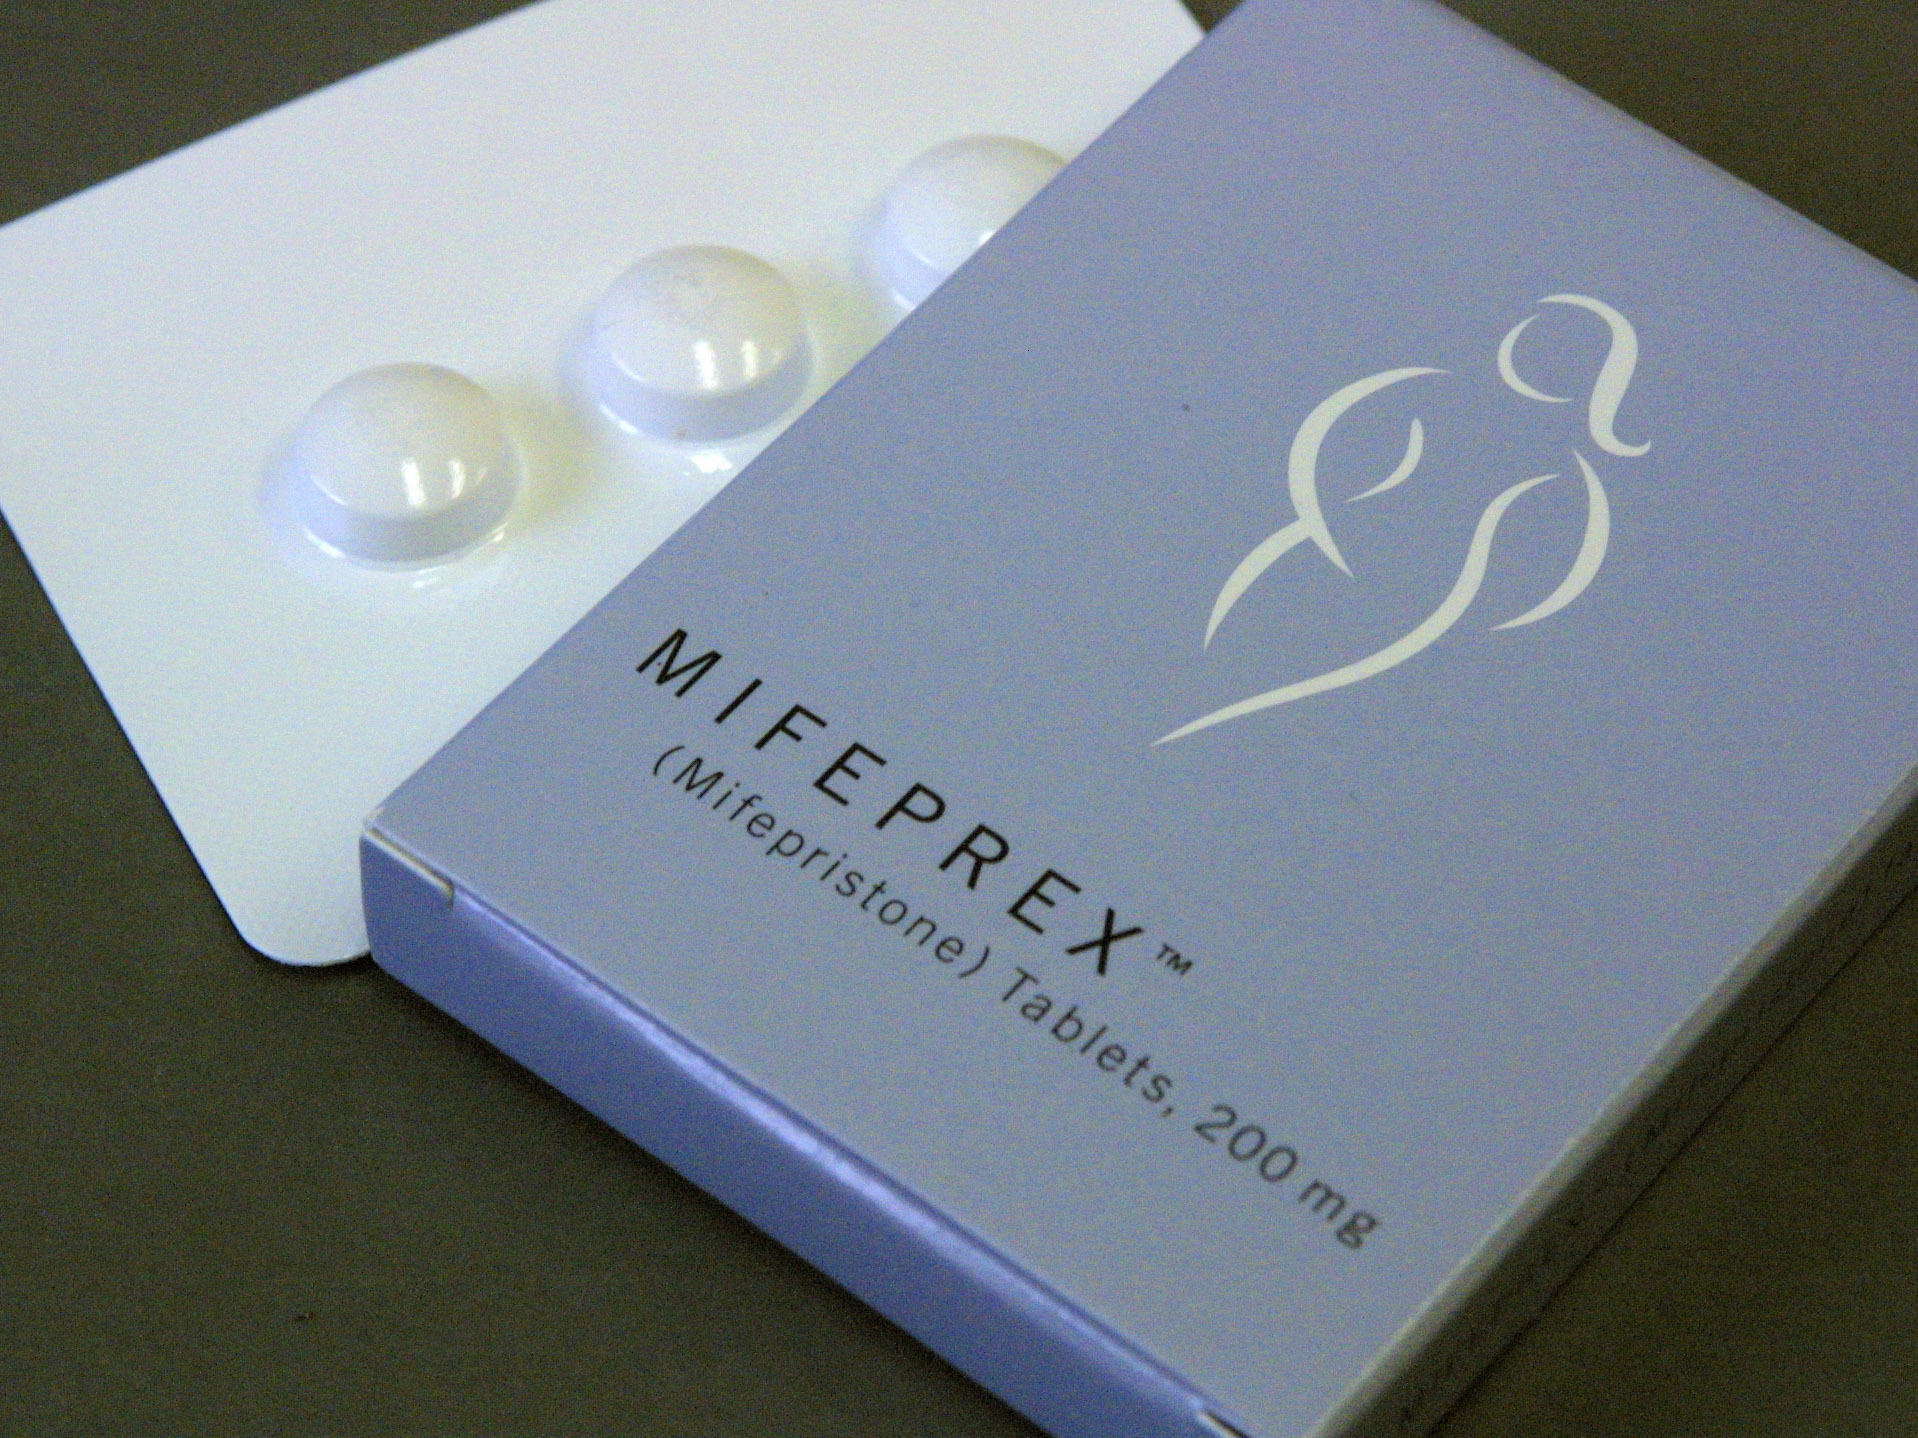 mifeprex for sale, buy mifeprex online, mifeprex pill, mifeprex online buy